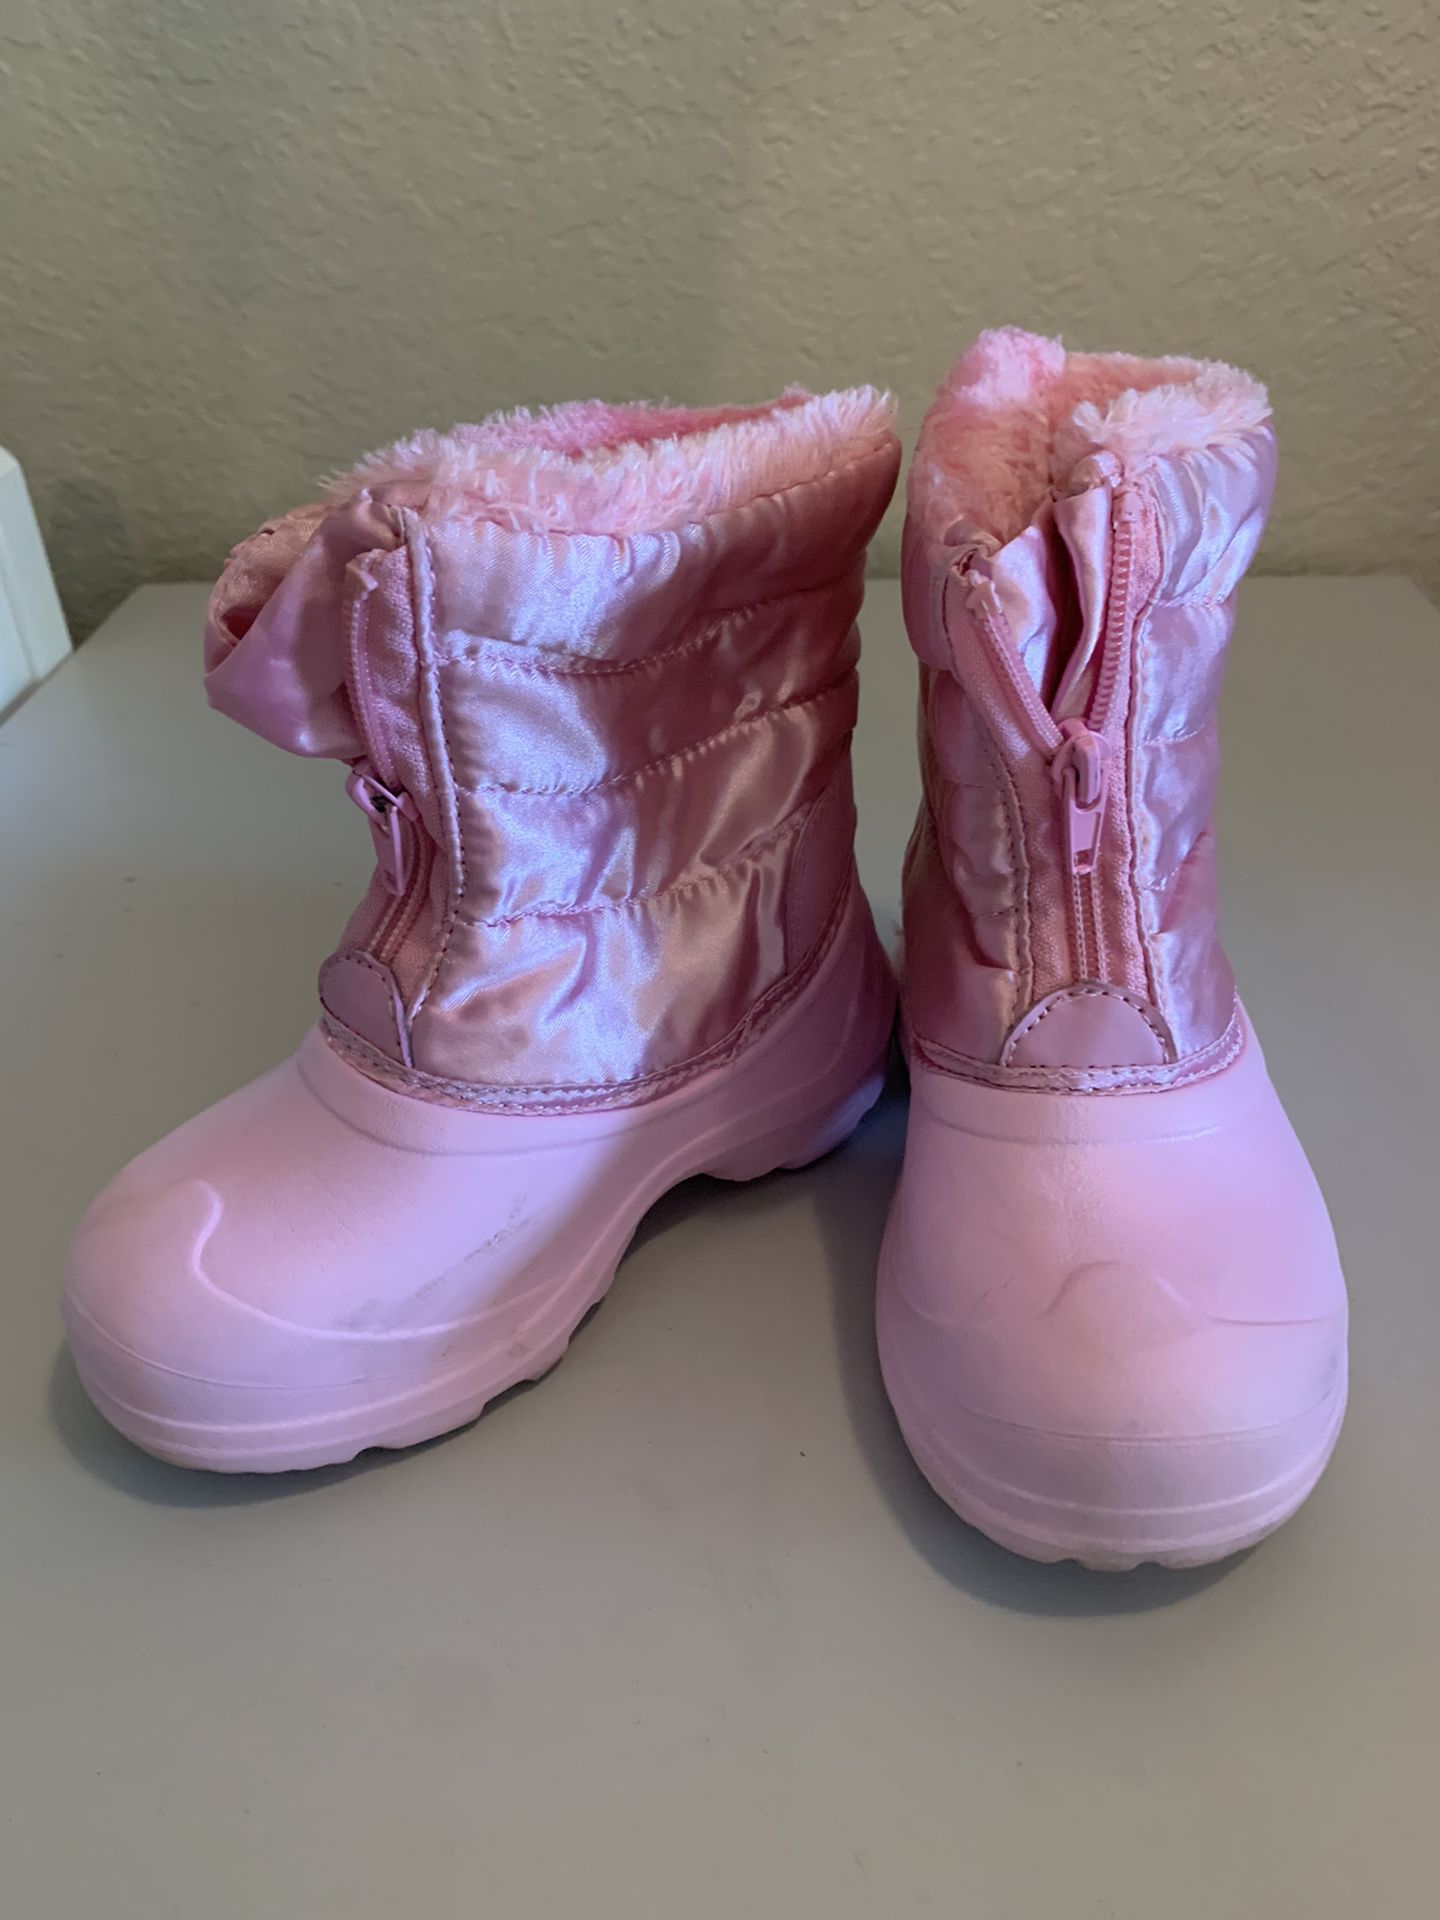 Girls 9 snow/winter boots